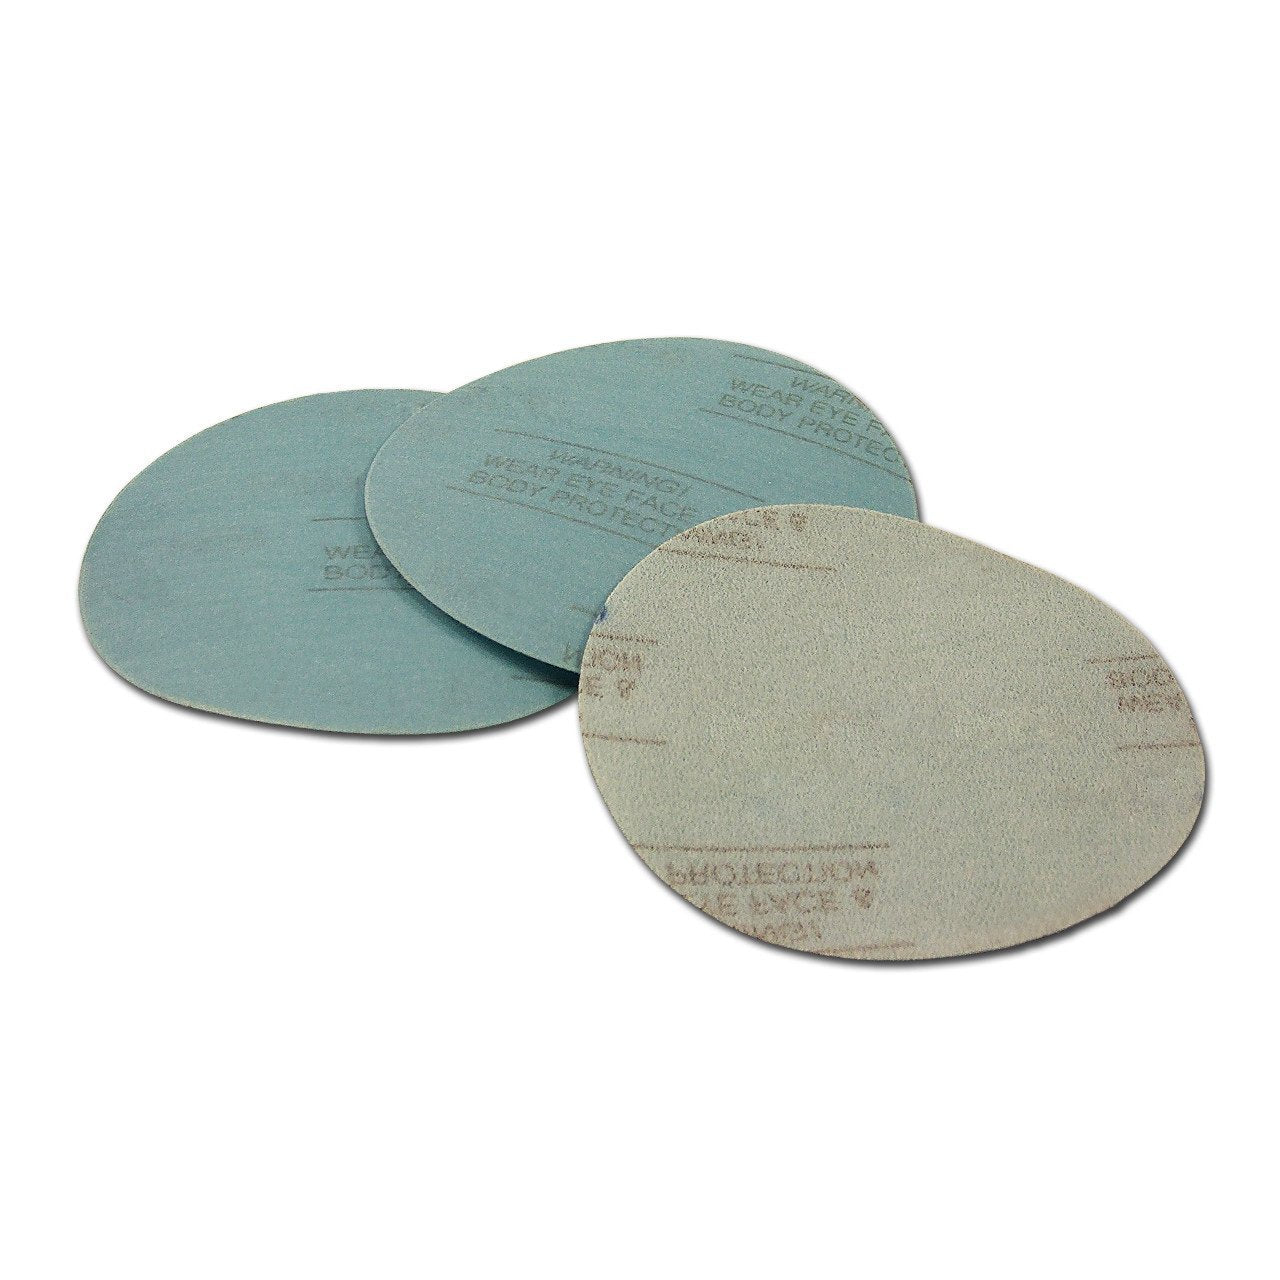 5 Inch Hook and Loop Blue Wet / Dry Sharpening Film Sanding Discs, 50 Pack - Red Label Abrasives